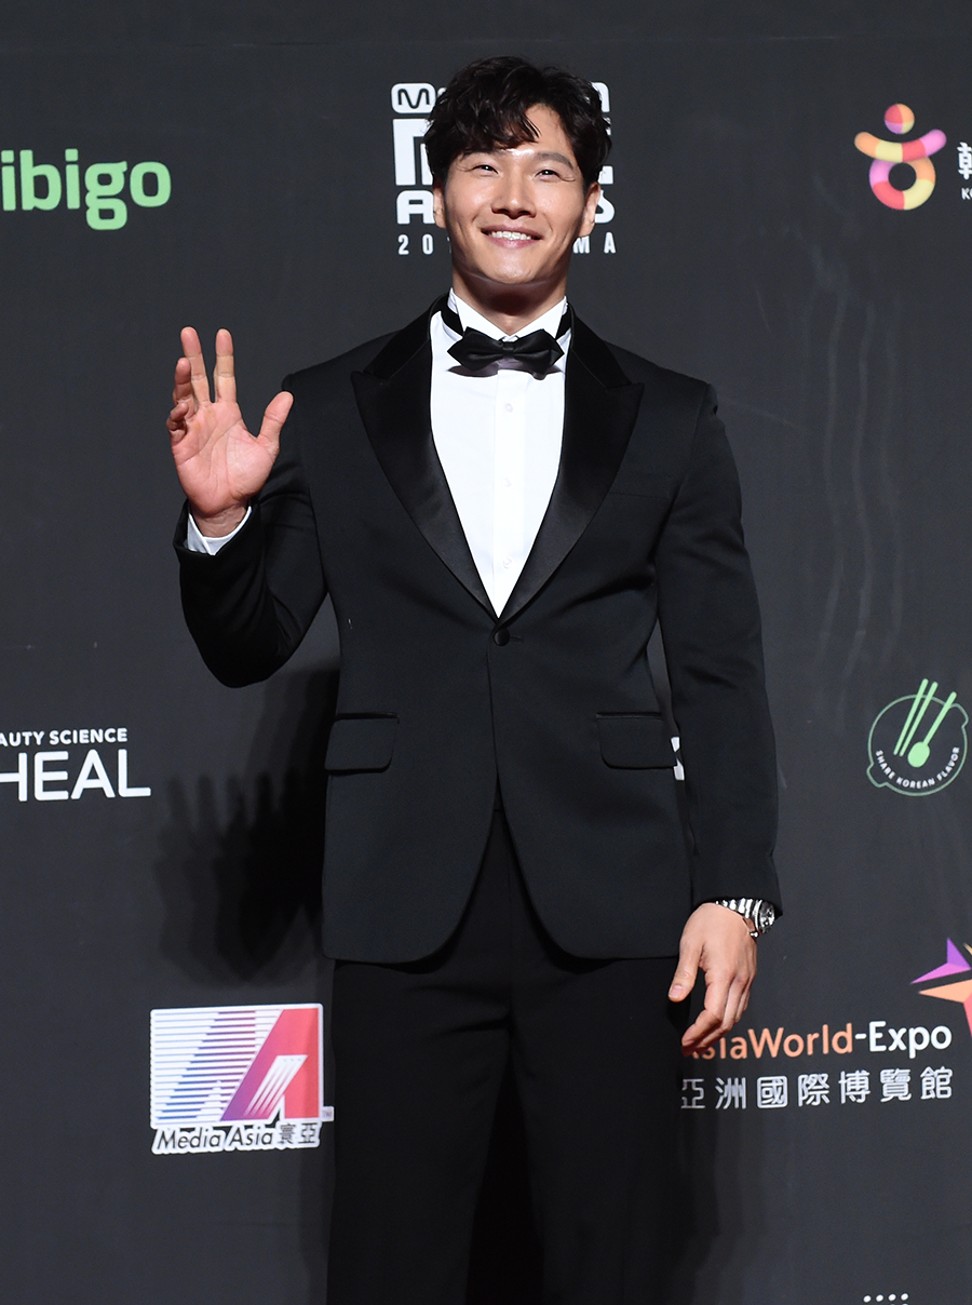 Singer and actor Kim Jung-kook